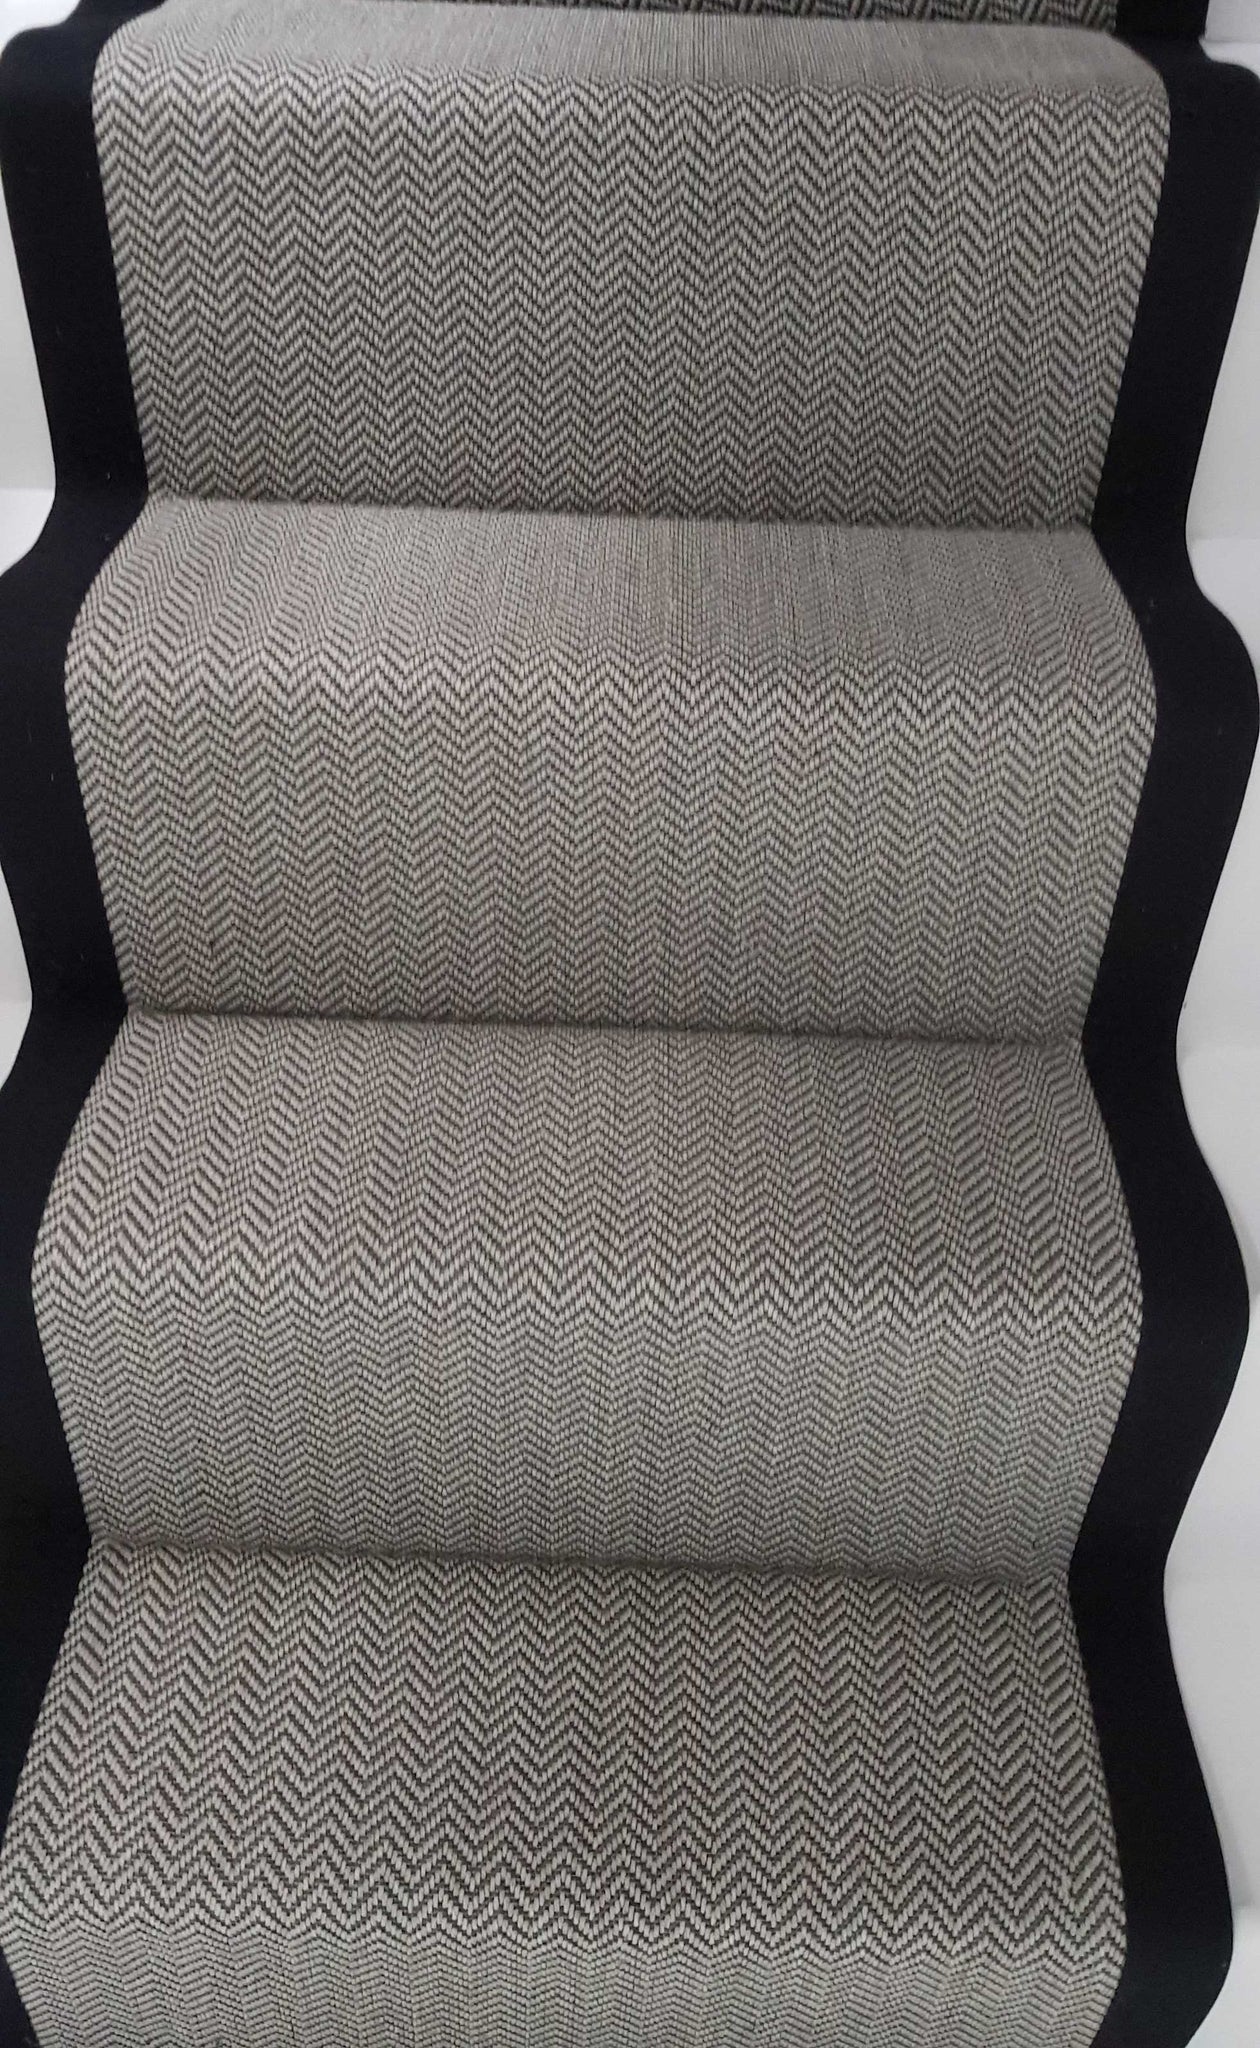 Black and White Herringbone Faux Sisal Carpet Stair Runner with cotton border